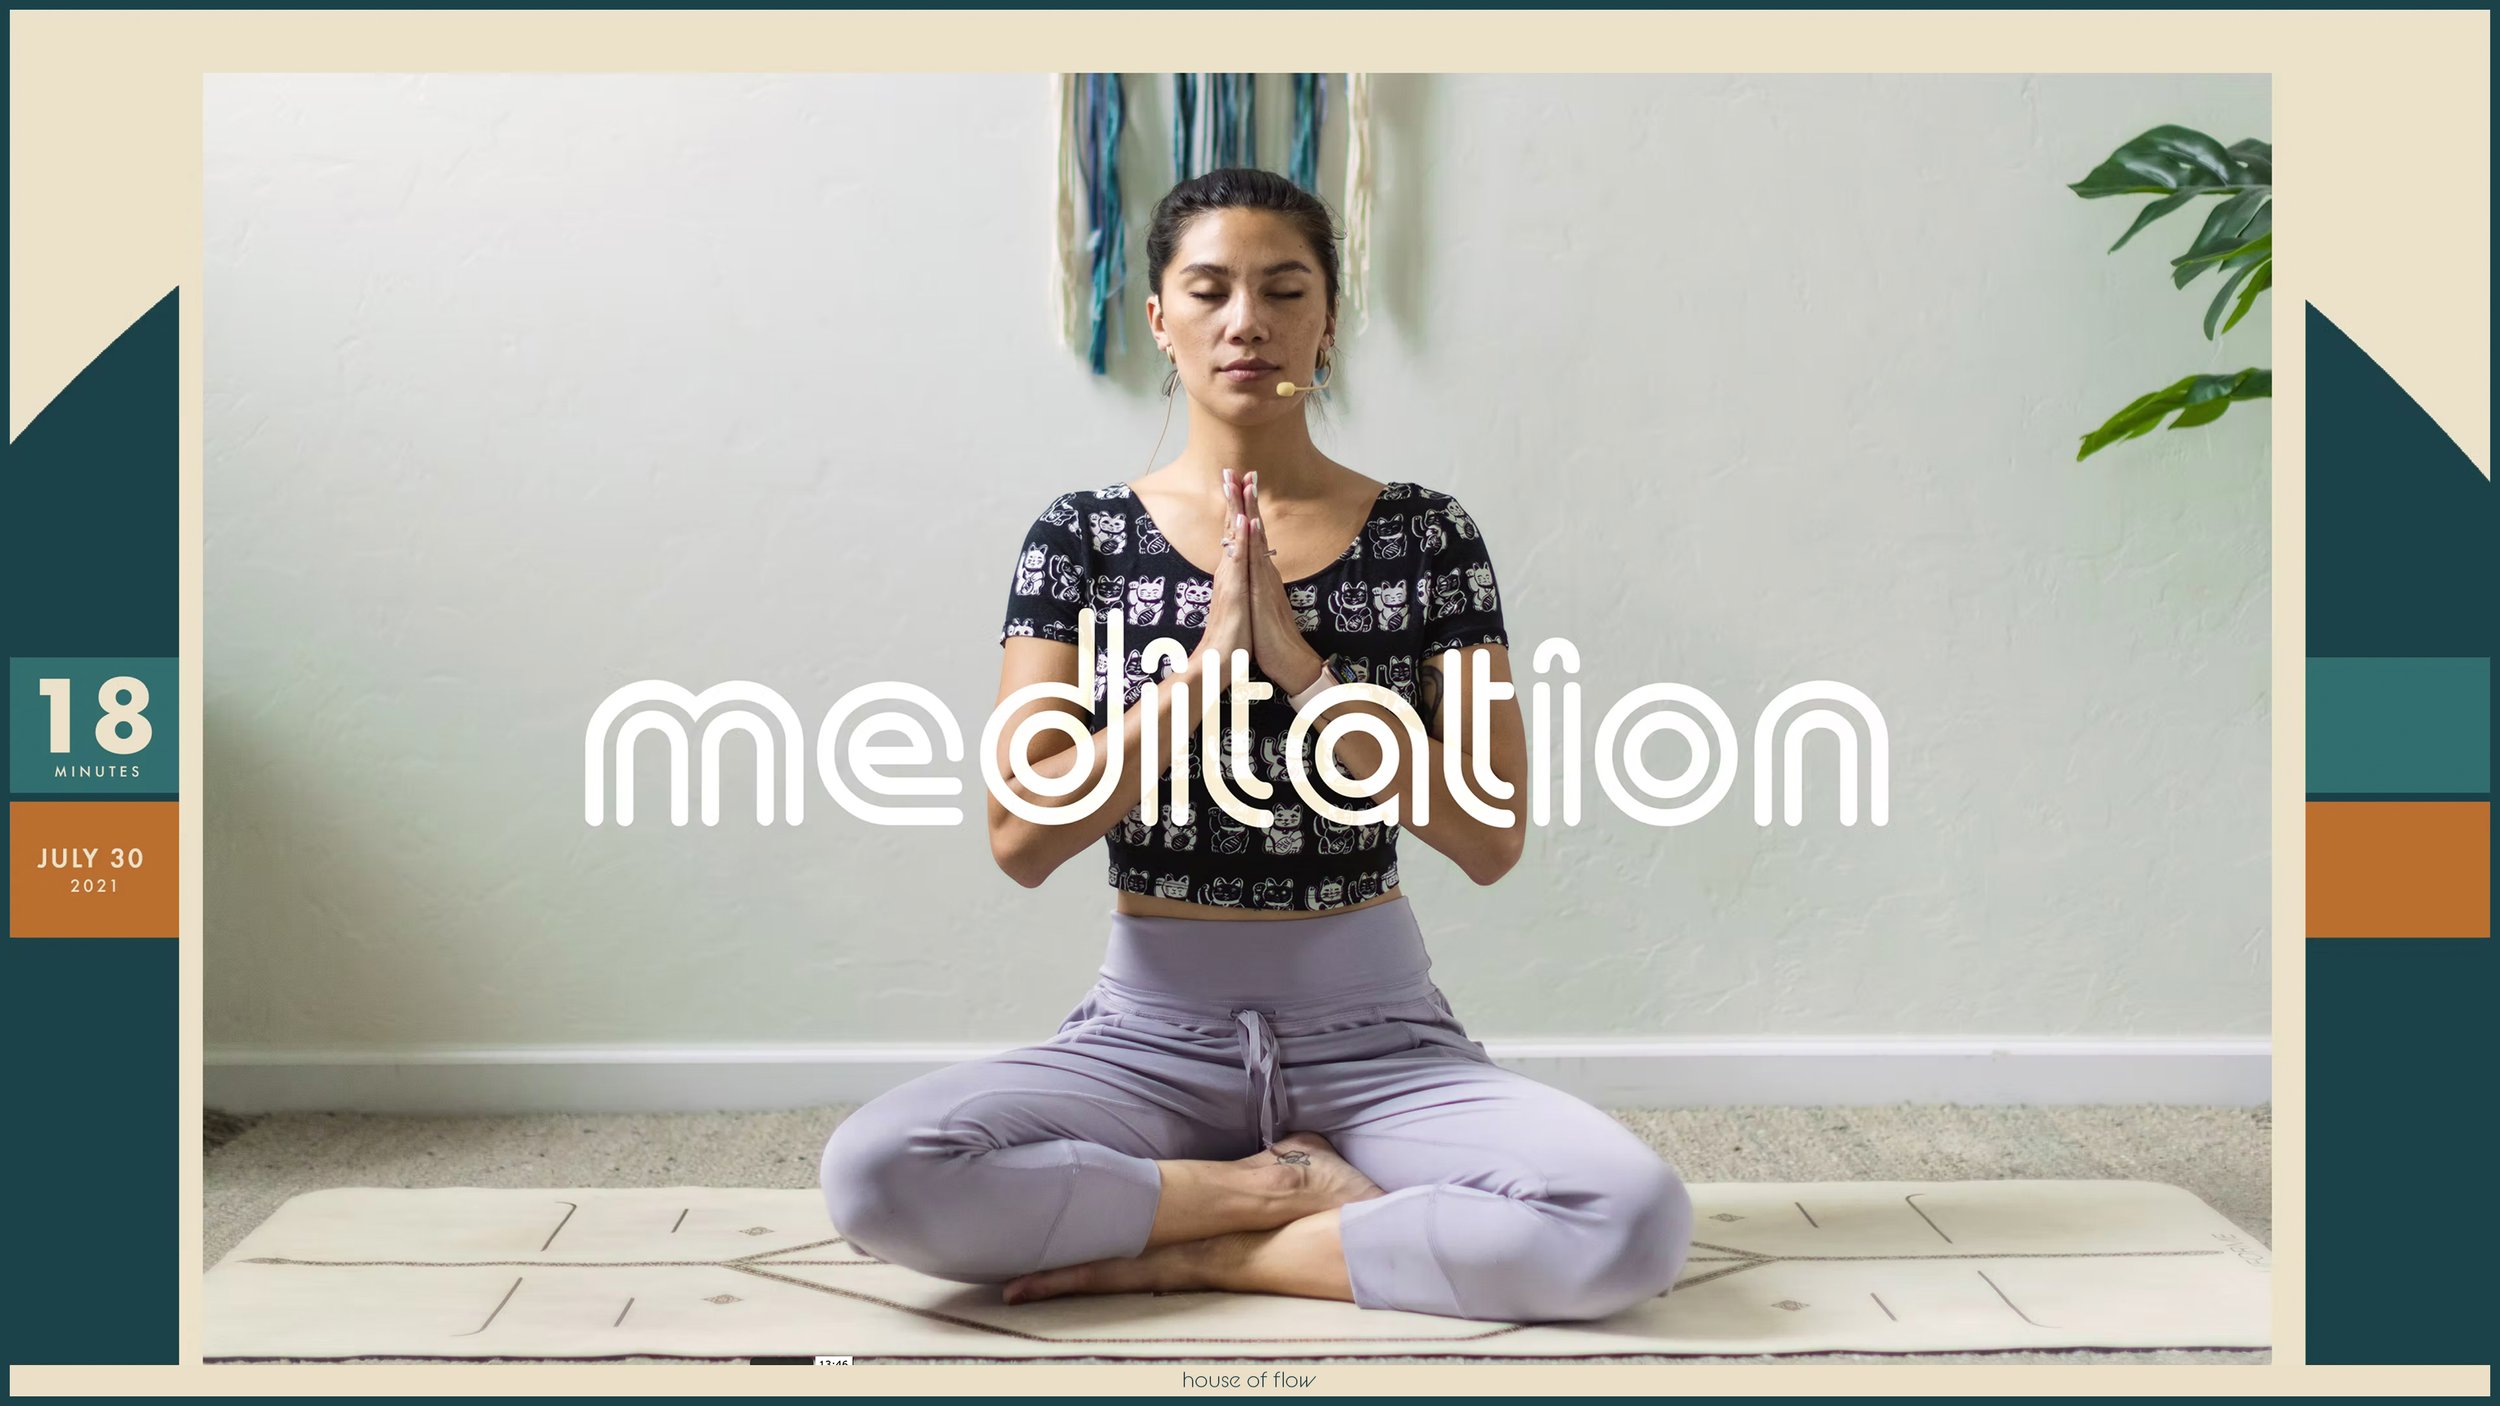 Meditation | Neck Stretch & Gratitude | 18 minutes